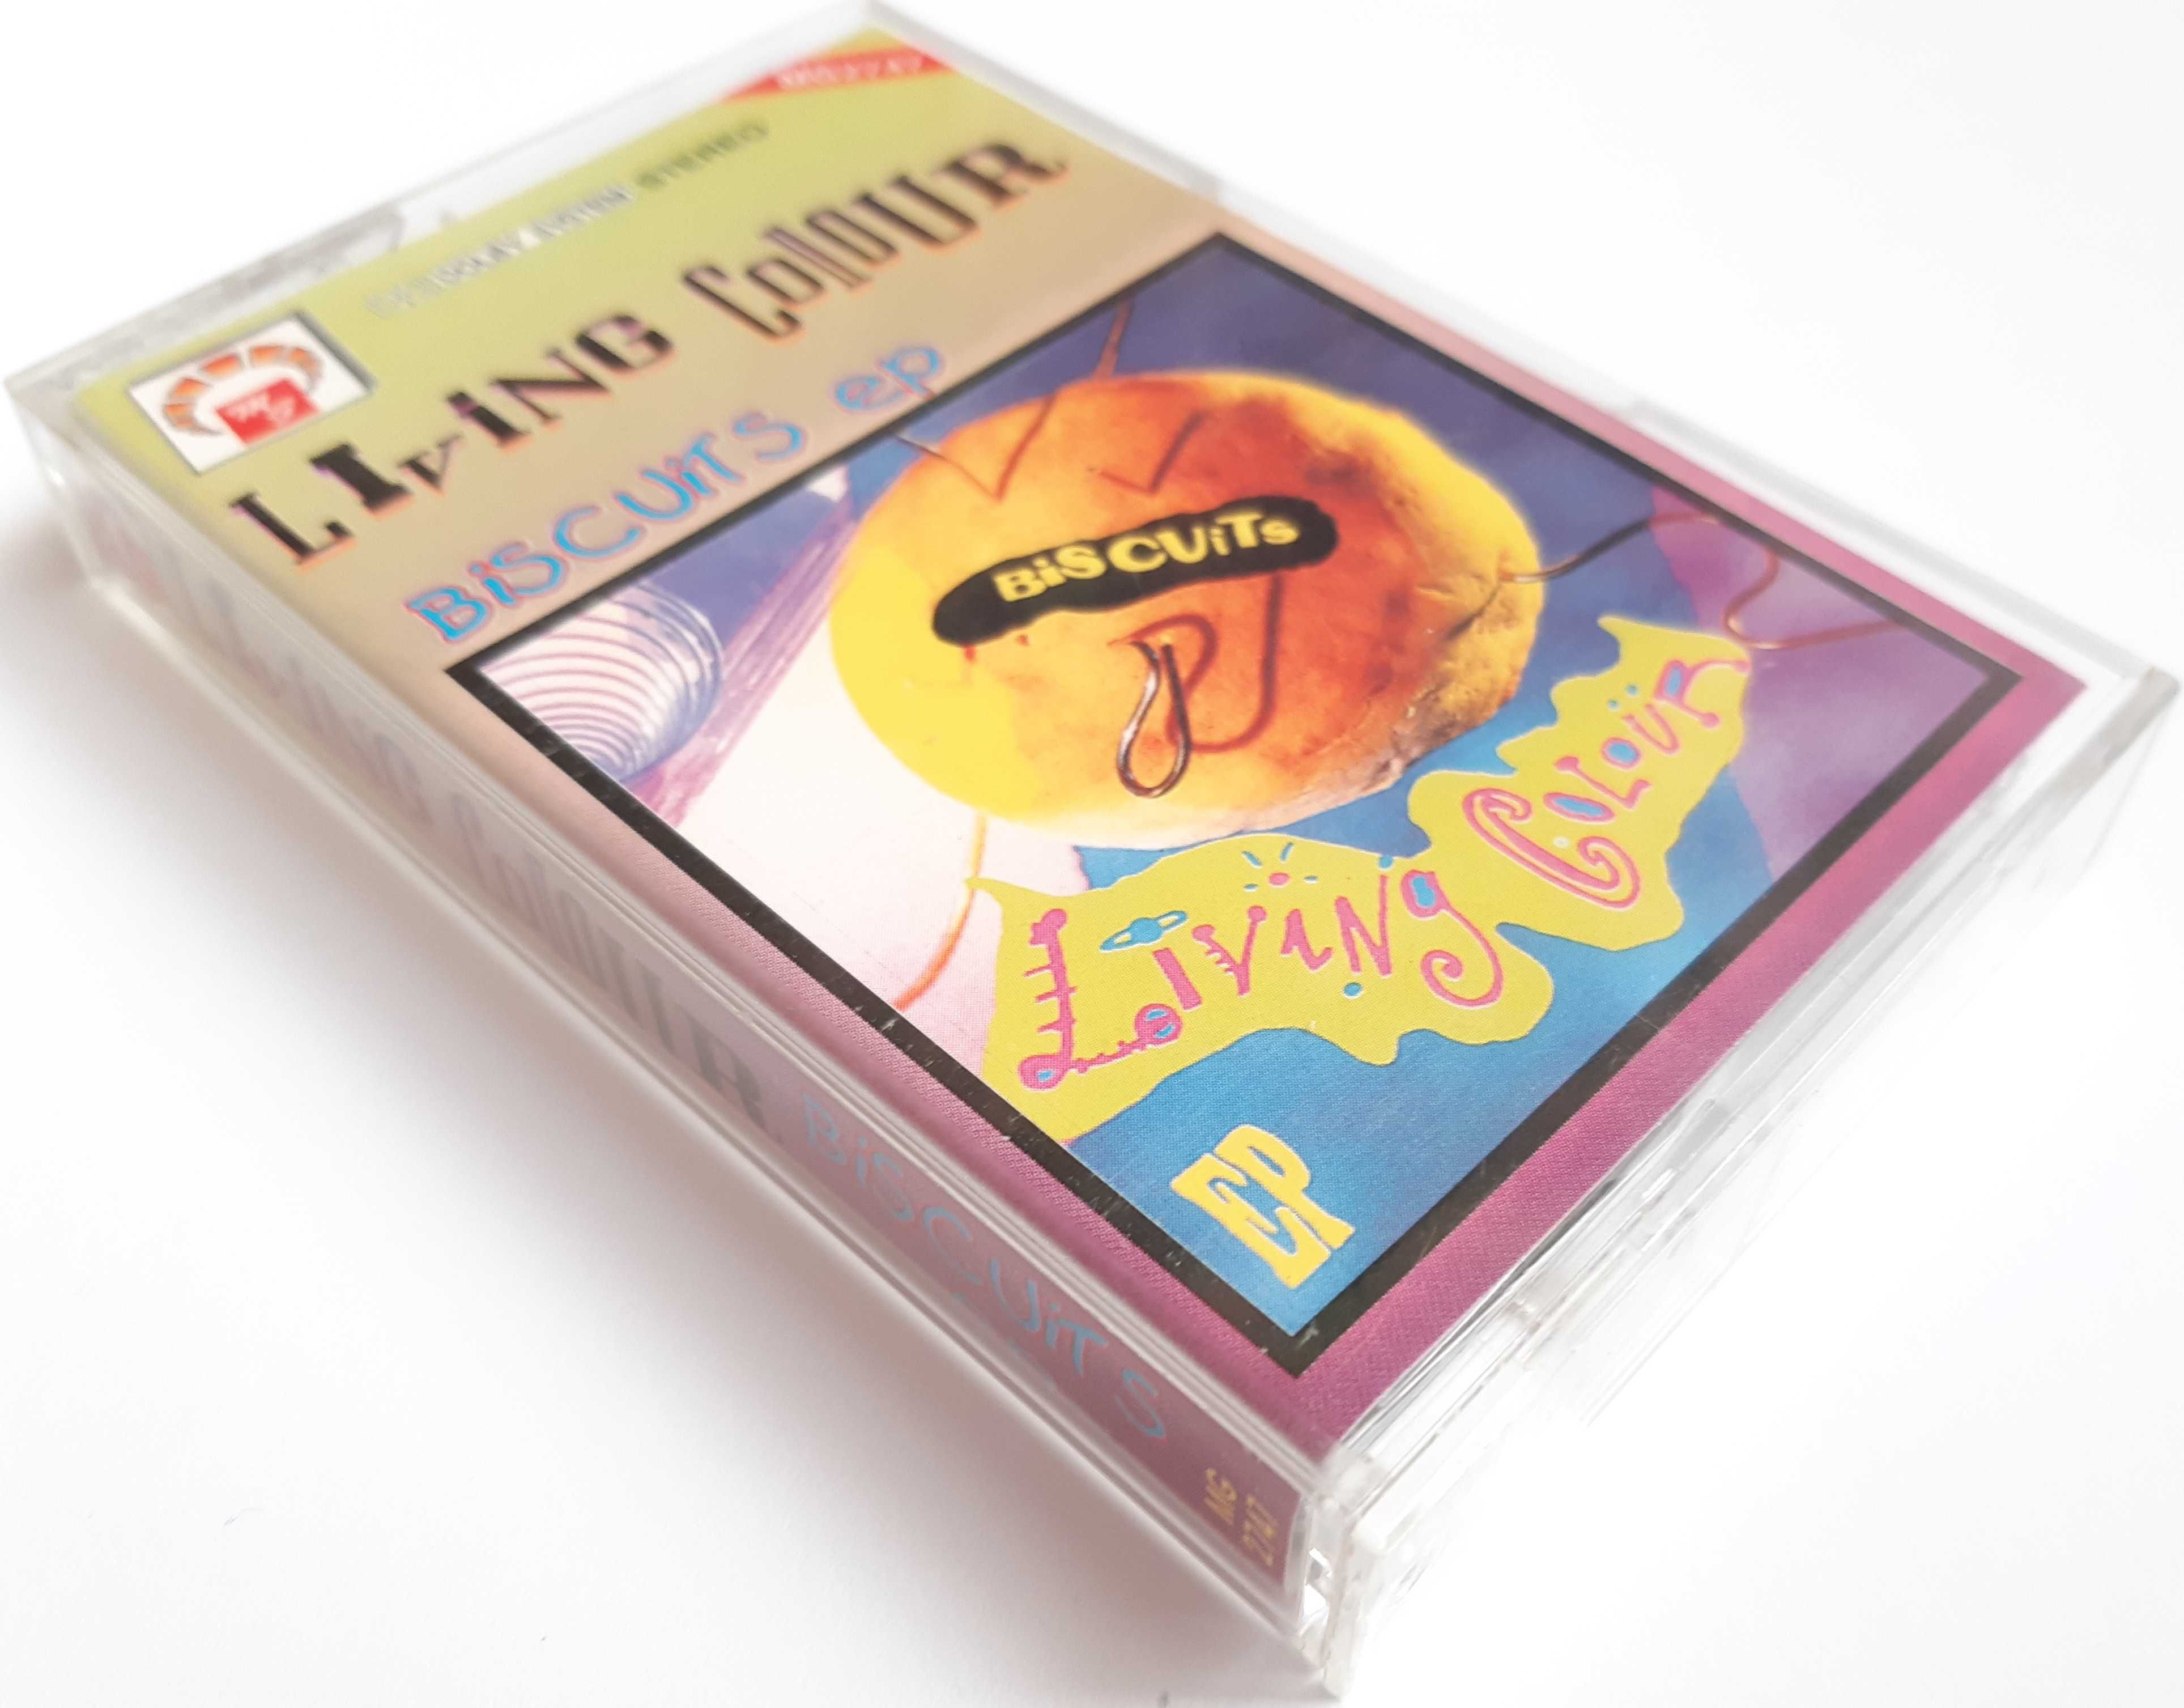 Living Colour - Biscuits EP [KASETA]